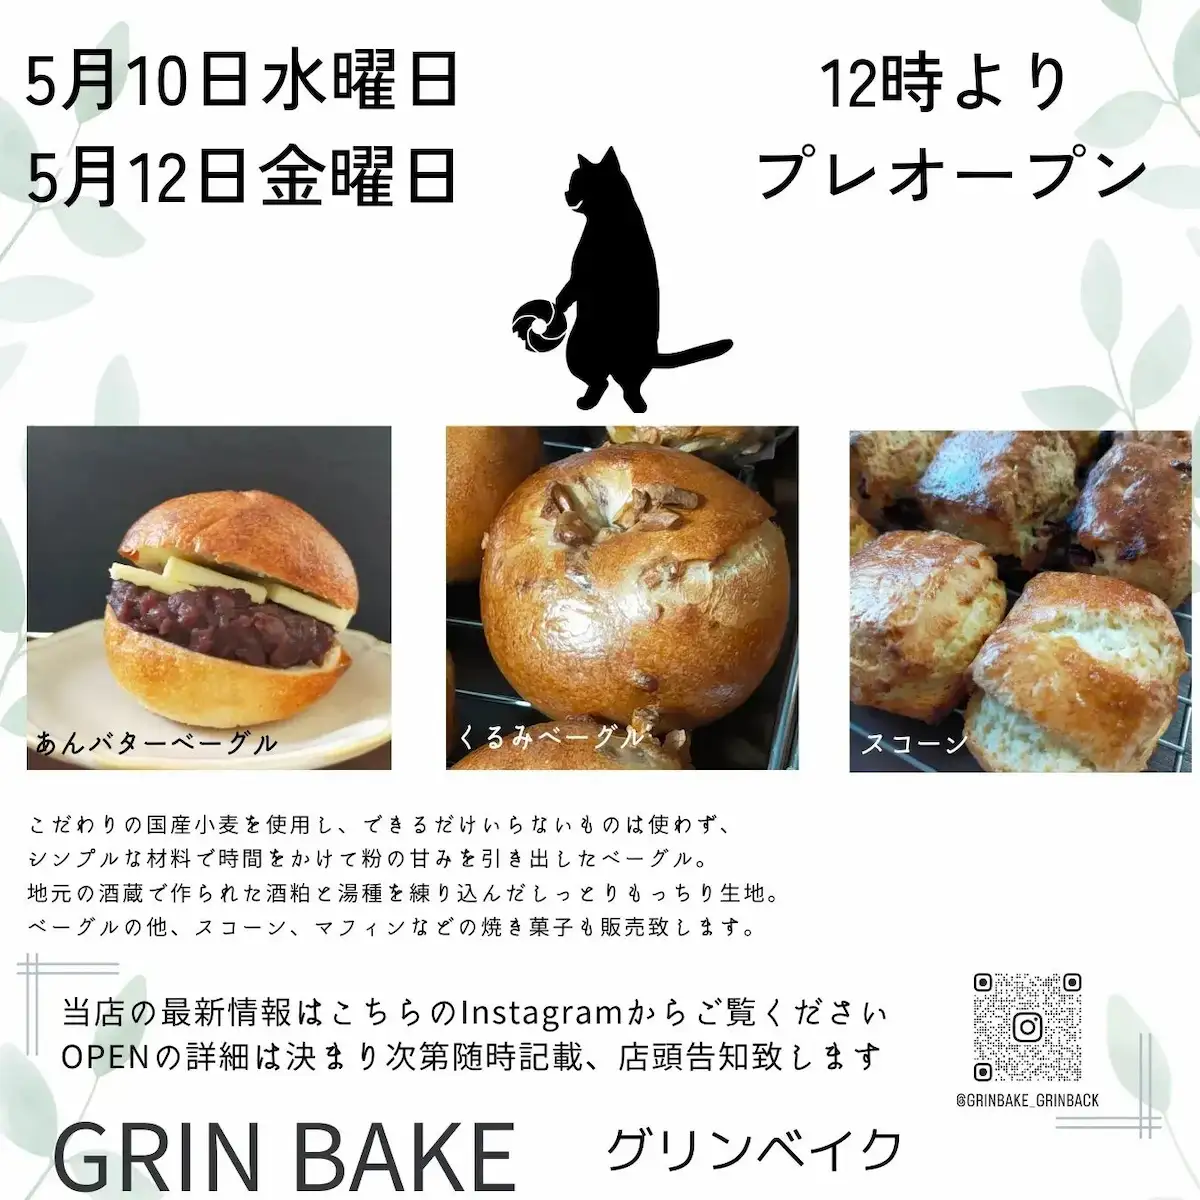 GRIN BAKE（グリンベイク）ってベーグルショップが5月10日にオープンするみたい。久留米市役所そば